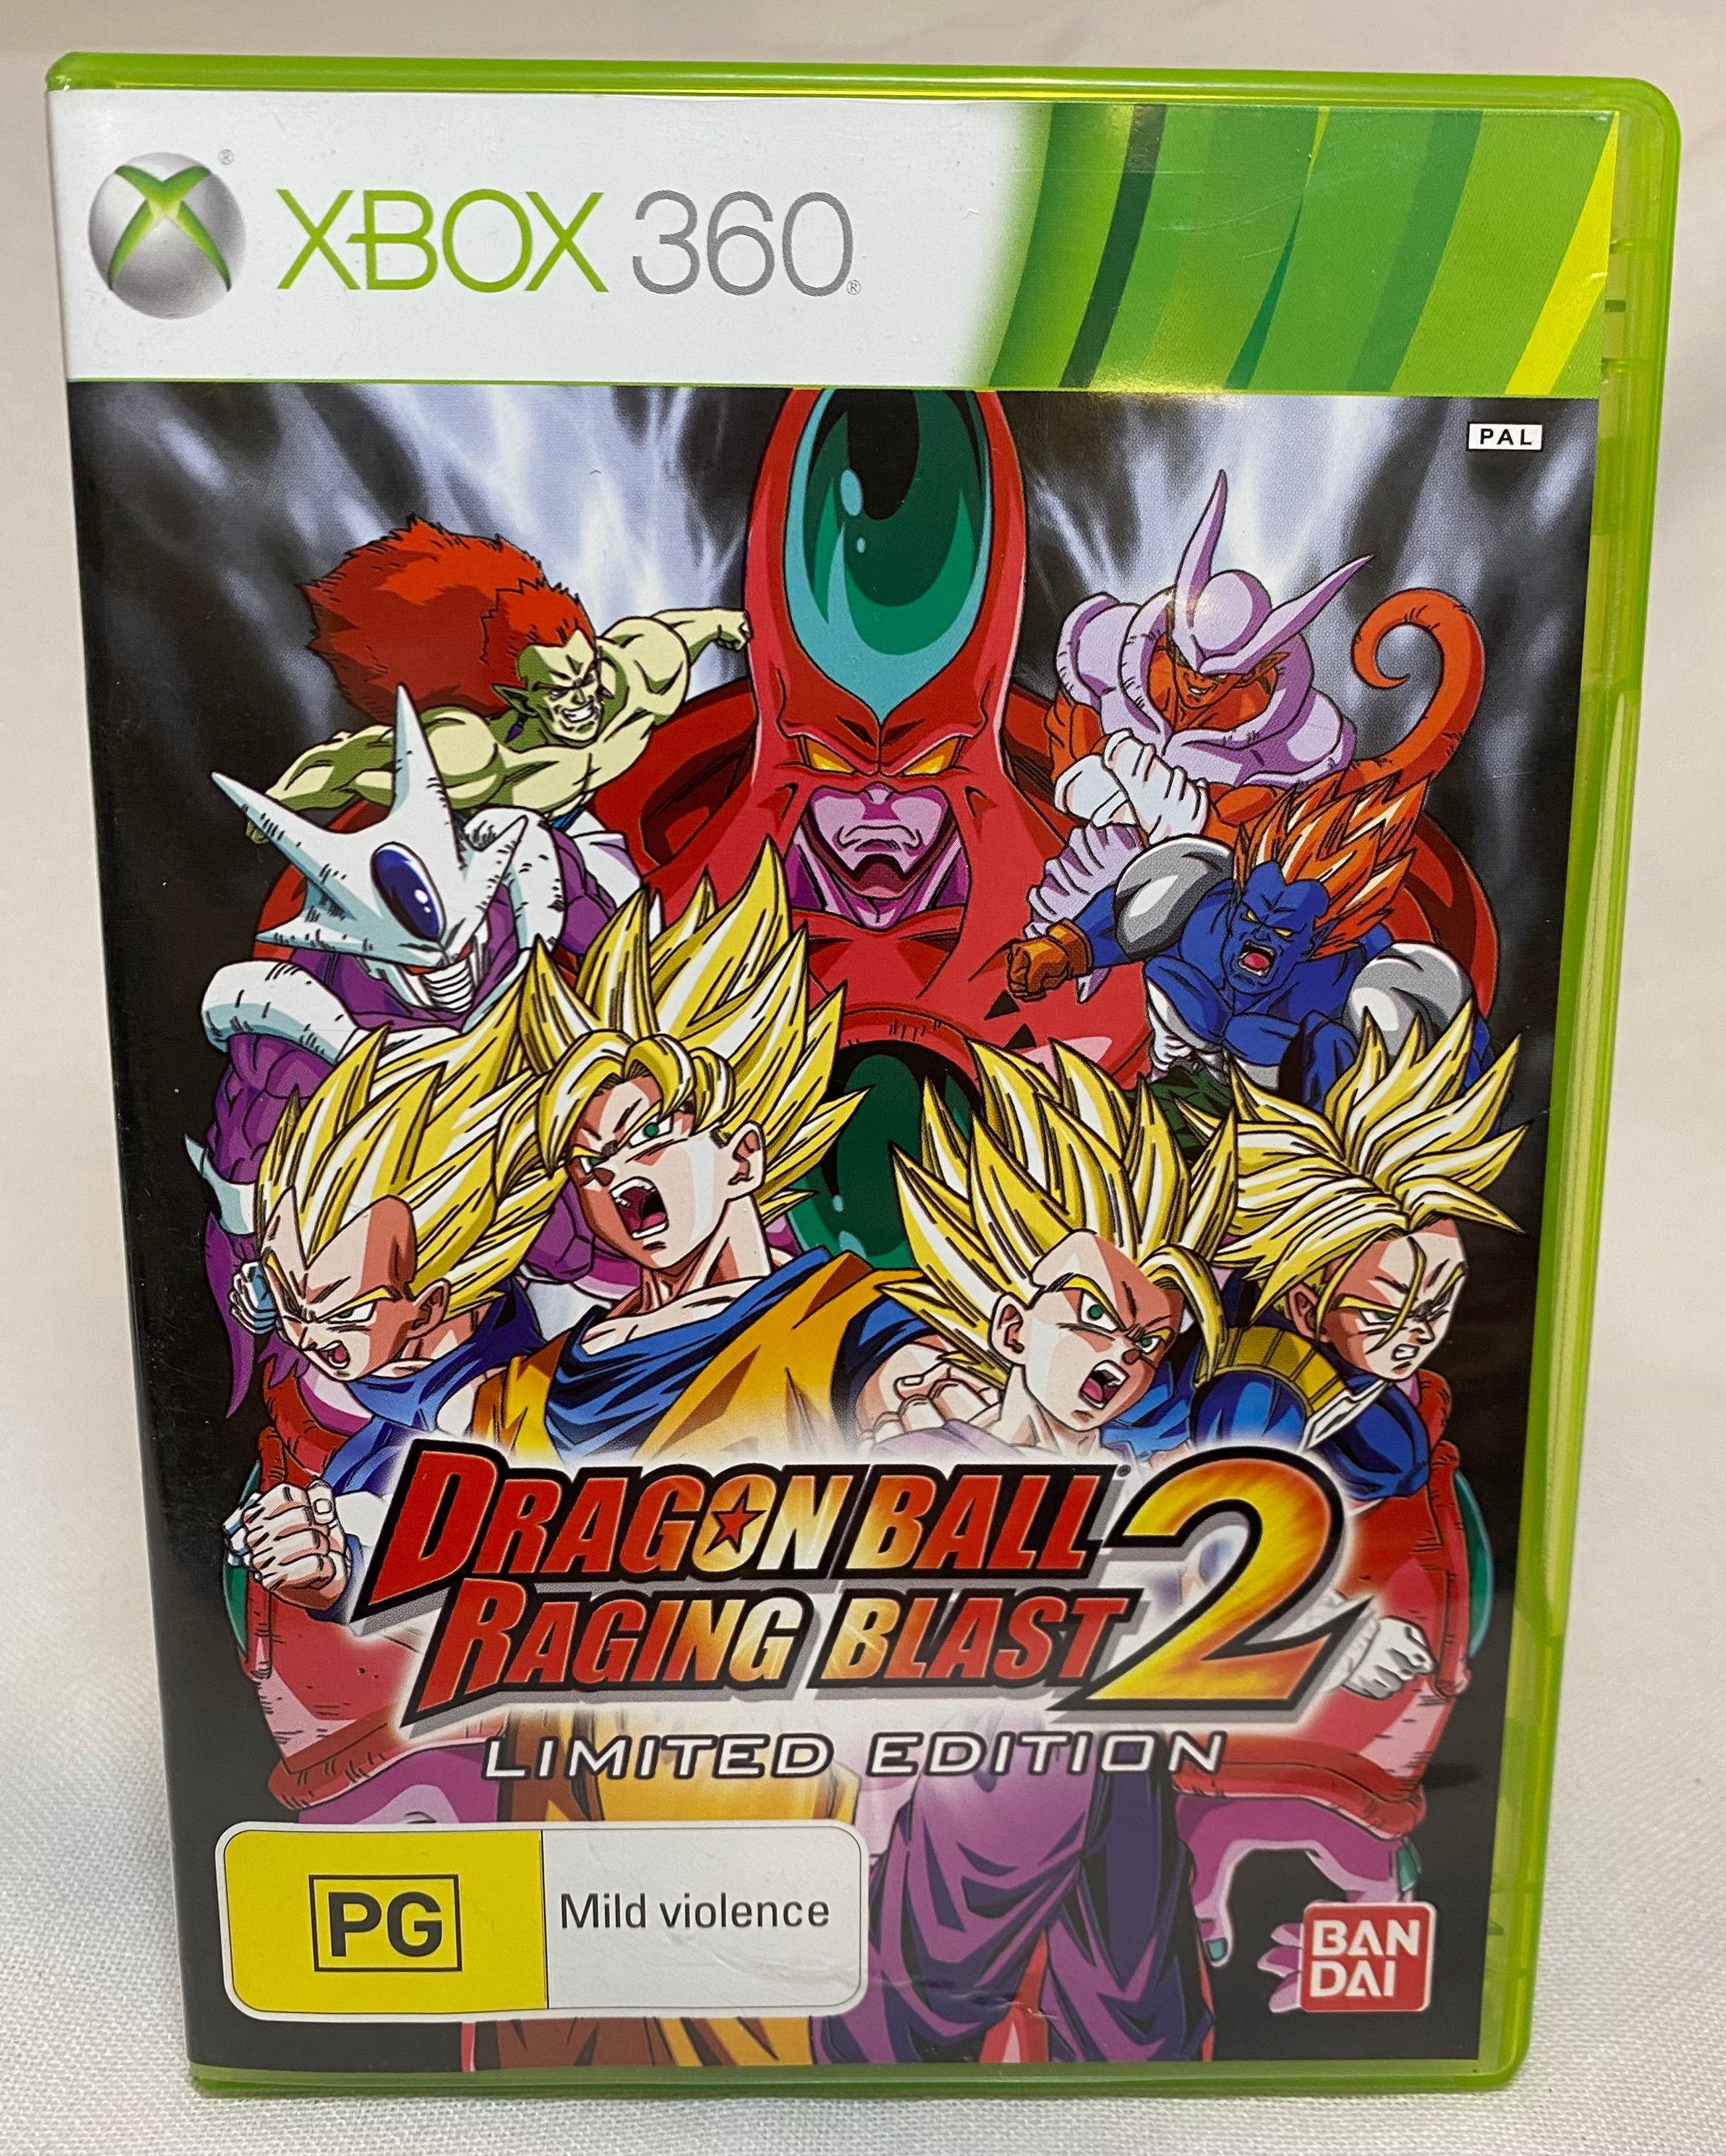 Game | Microsoft Xbox 360 | Dragon Ball Racing Blast 2 (Limited Edition)